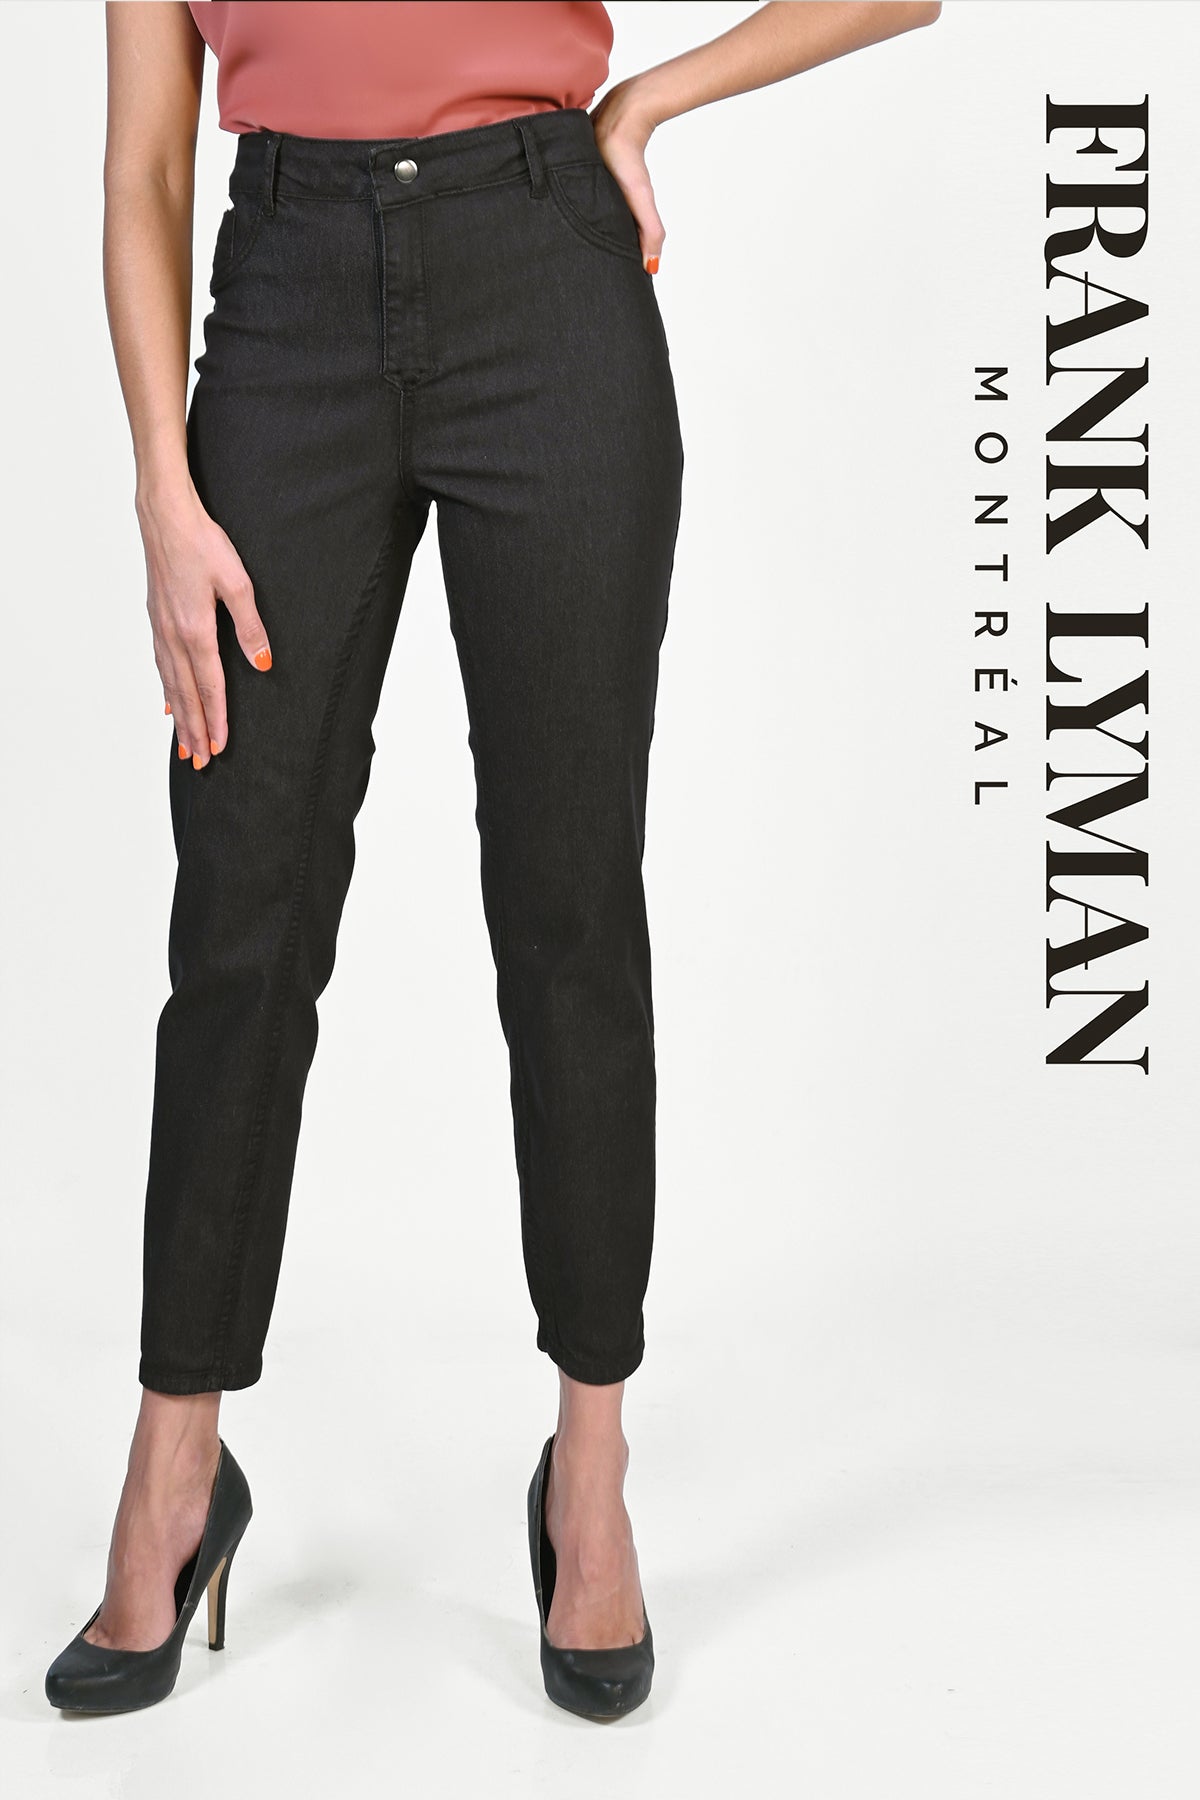 Frank Lyman Montreal Reversible Jeans-Buy Frank Lyman Montreal Jeans Online-Frank Lyman Montreal Online Denim Shop-Frank Lyman Montreal Fall 2022